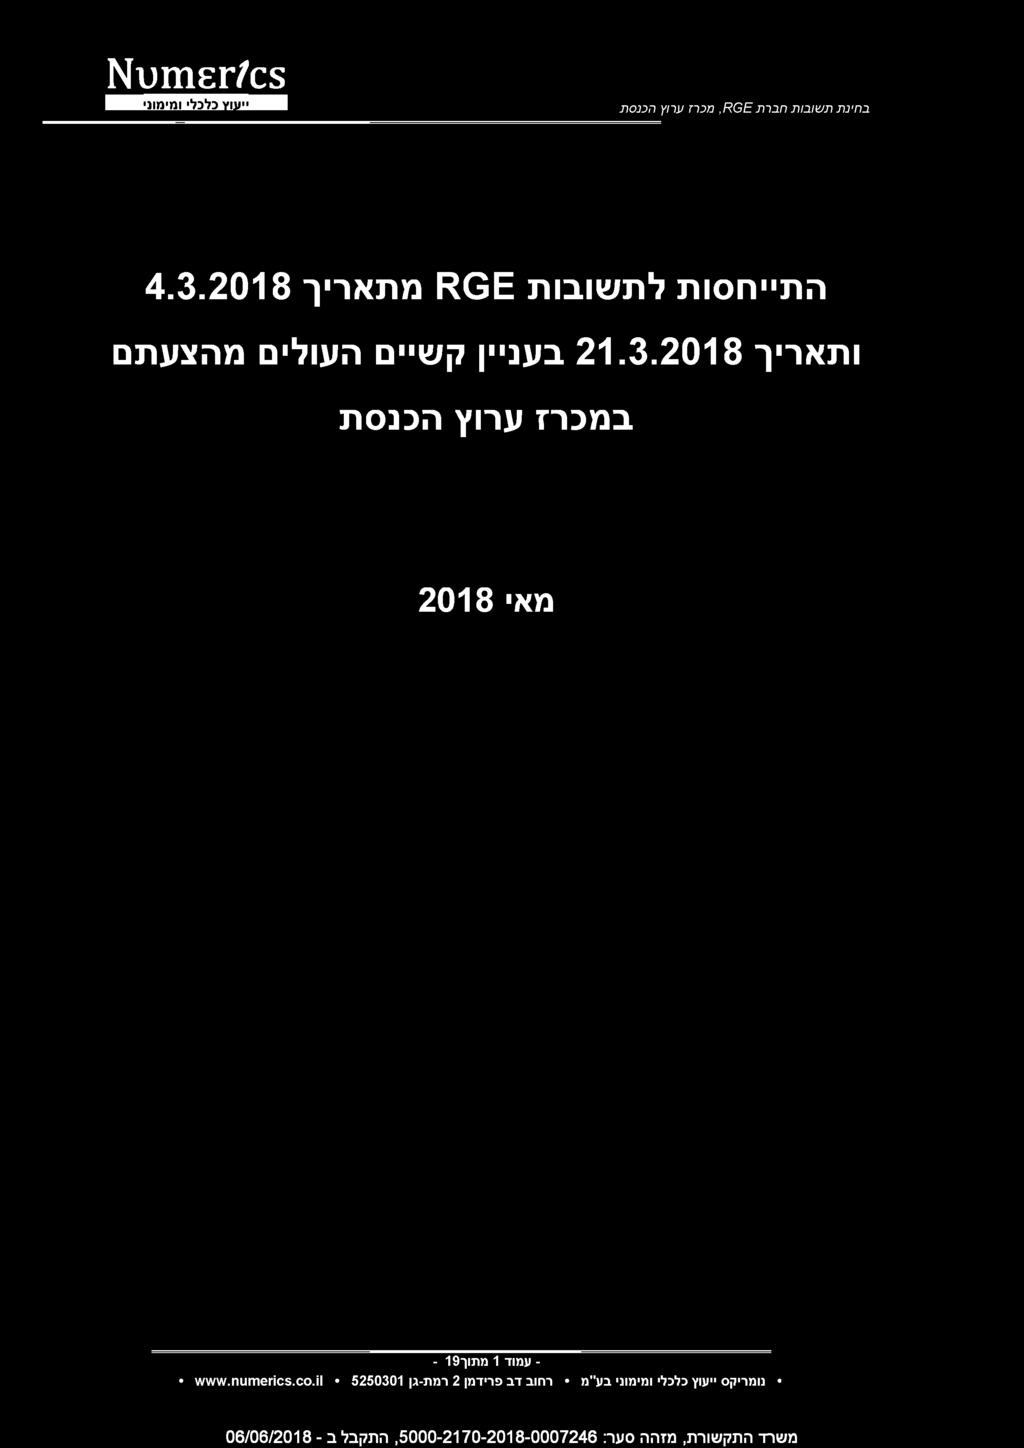 R I H חברת R, G E מכרז ערוץ הכנסת 4.3.